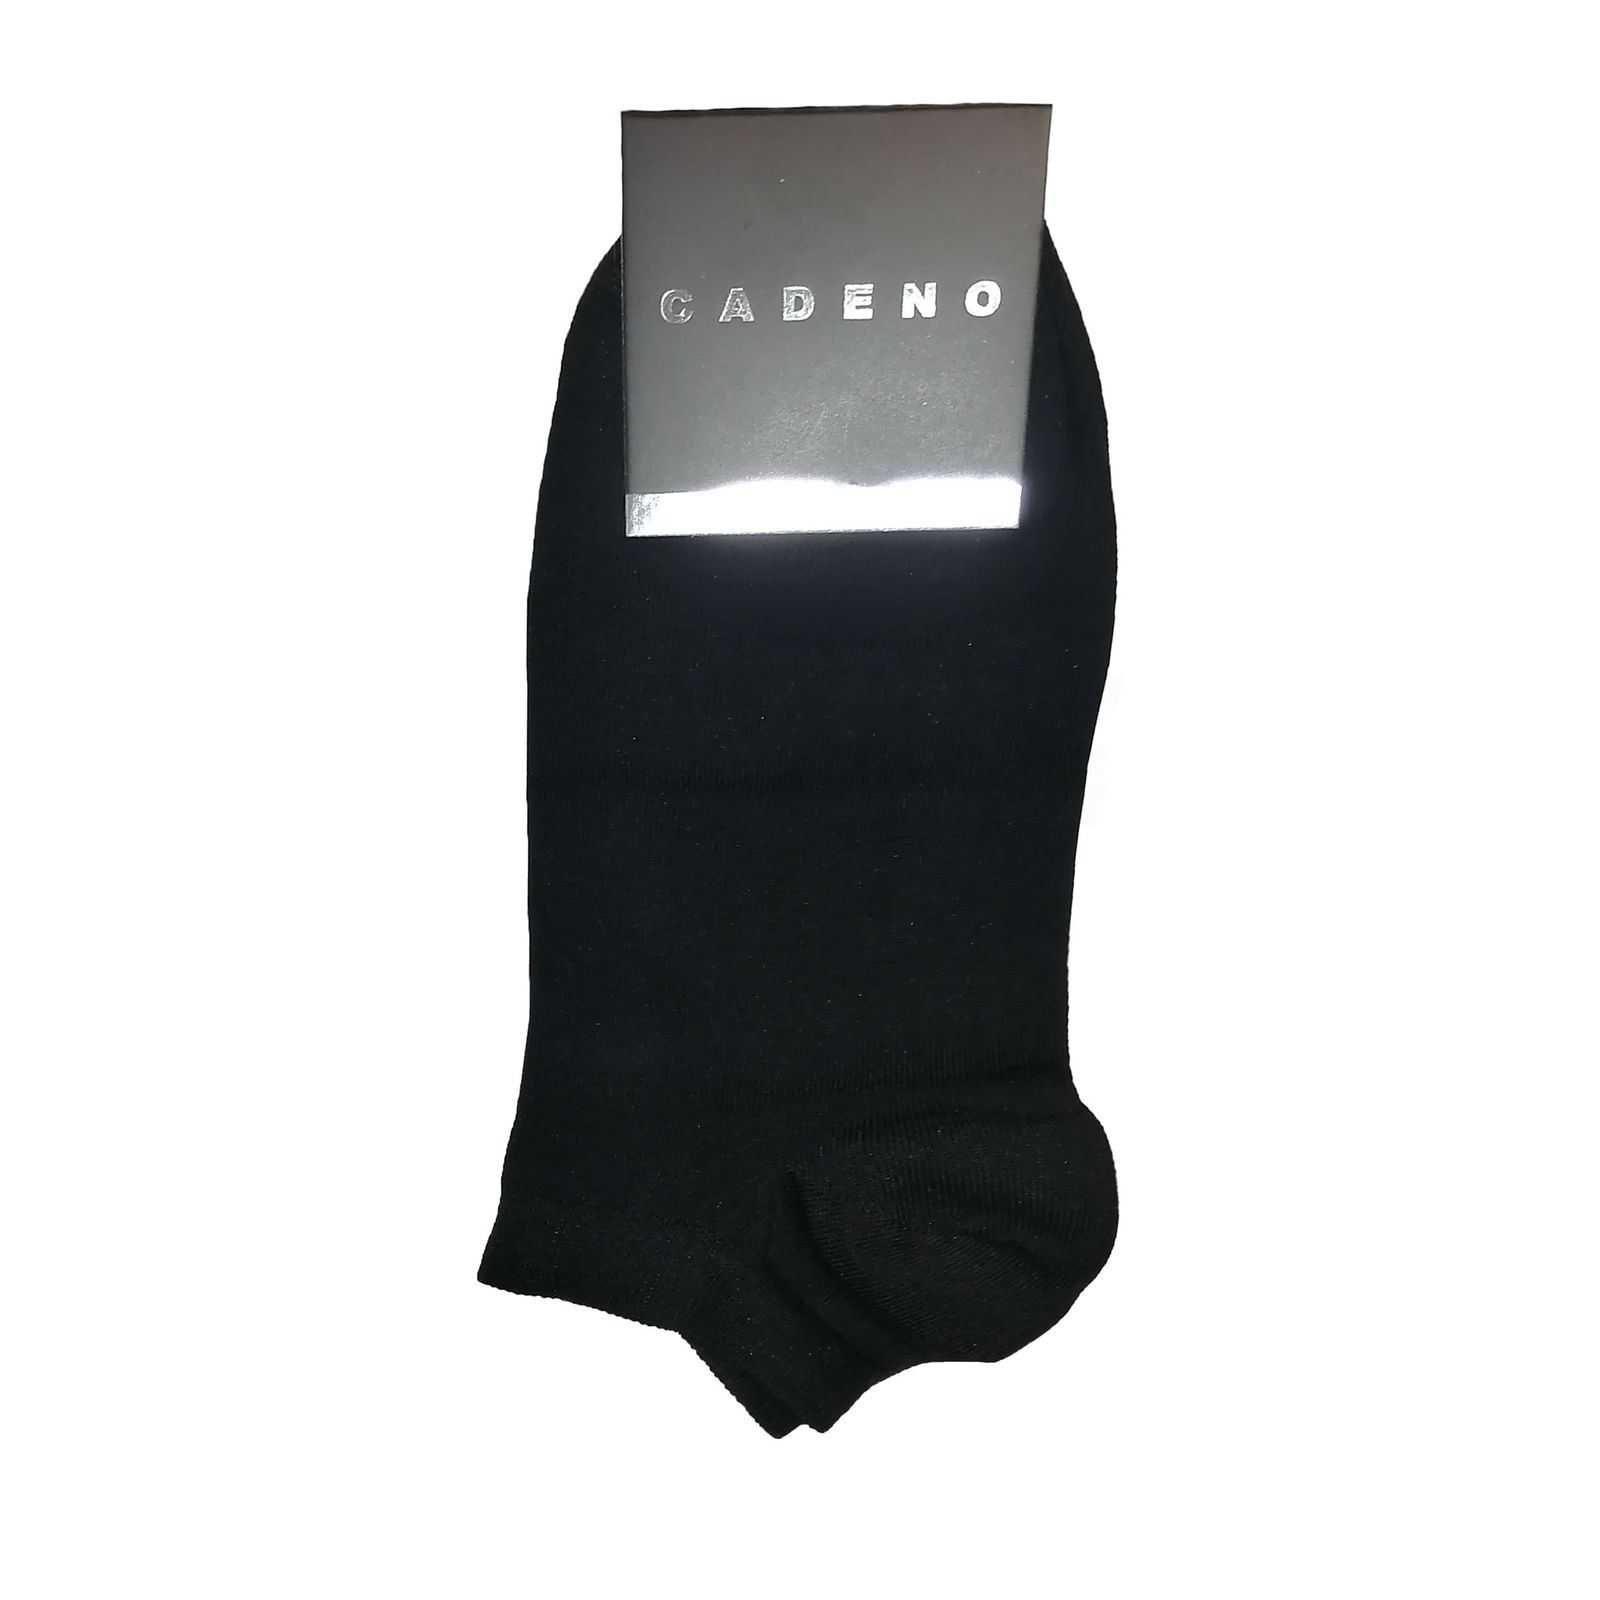 جوراب مردانه کادنو مدل Cam01 رنگ مشکی -  - 1